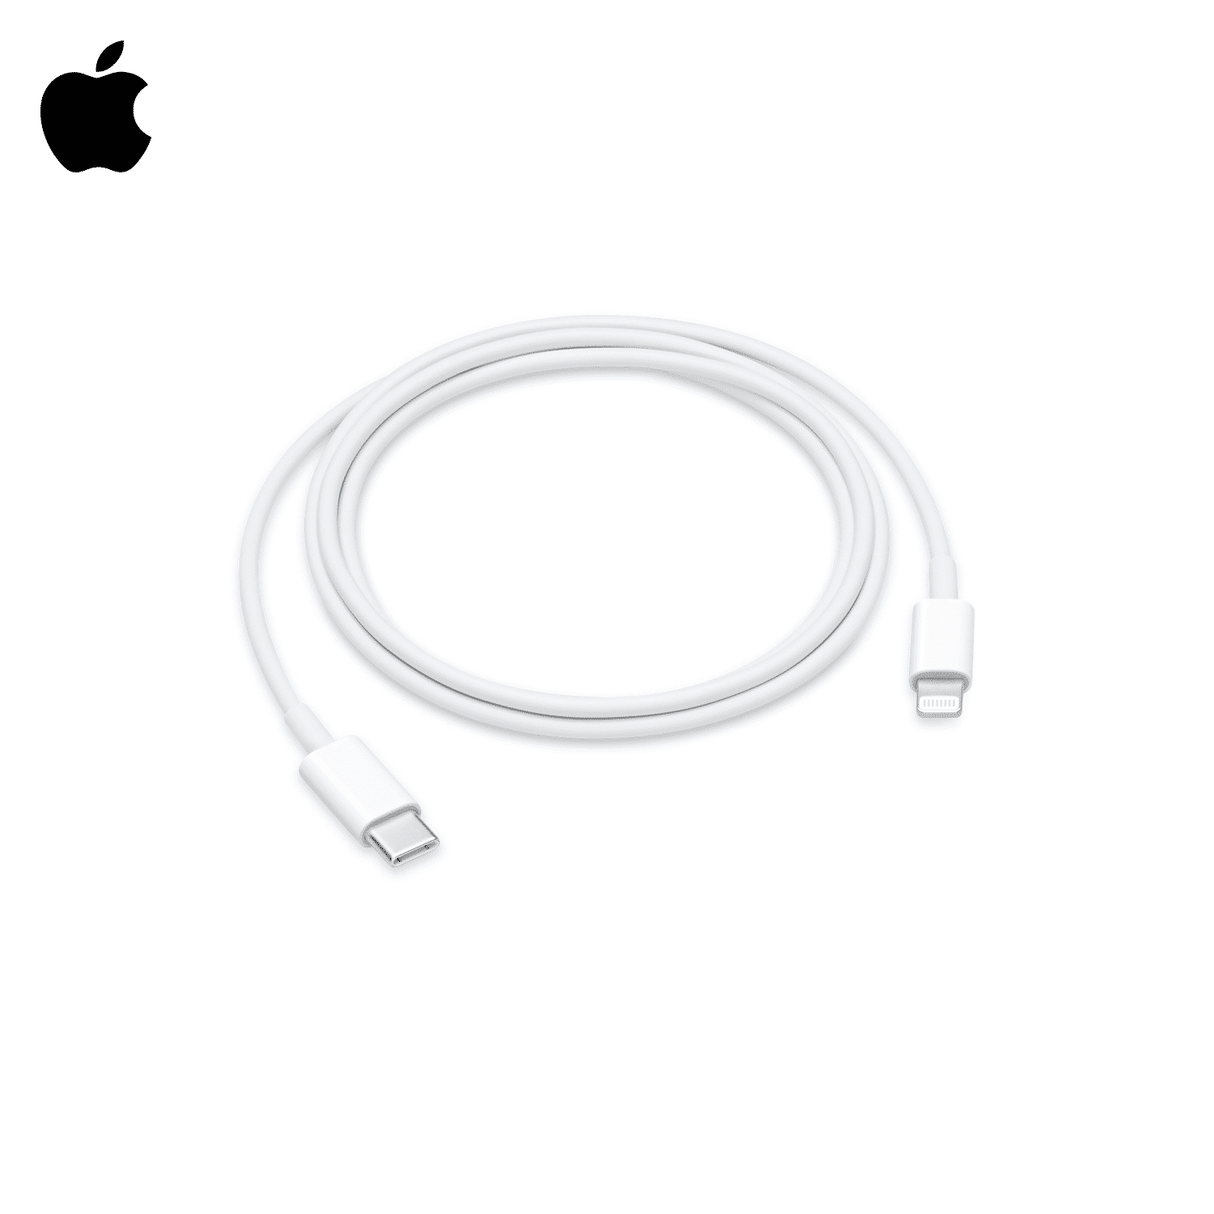 Cable Apple USB-C Lightning (1m)